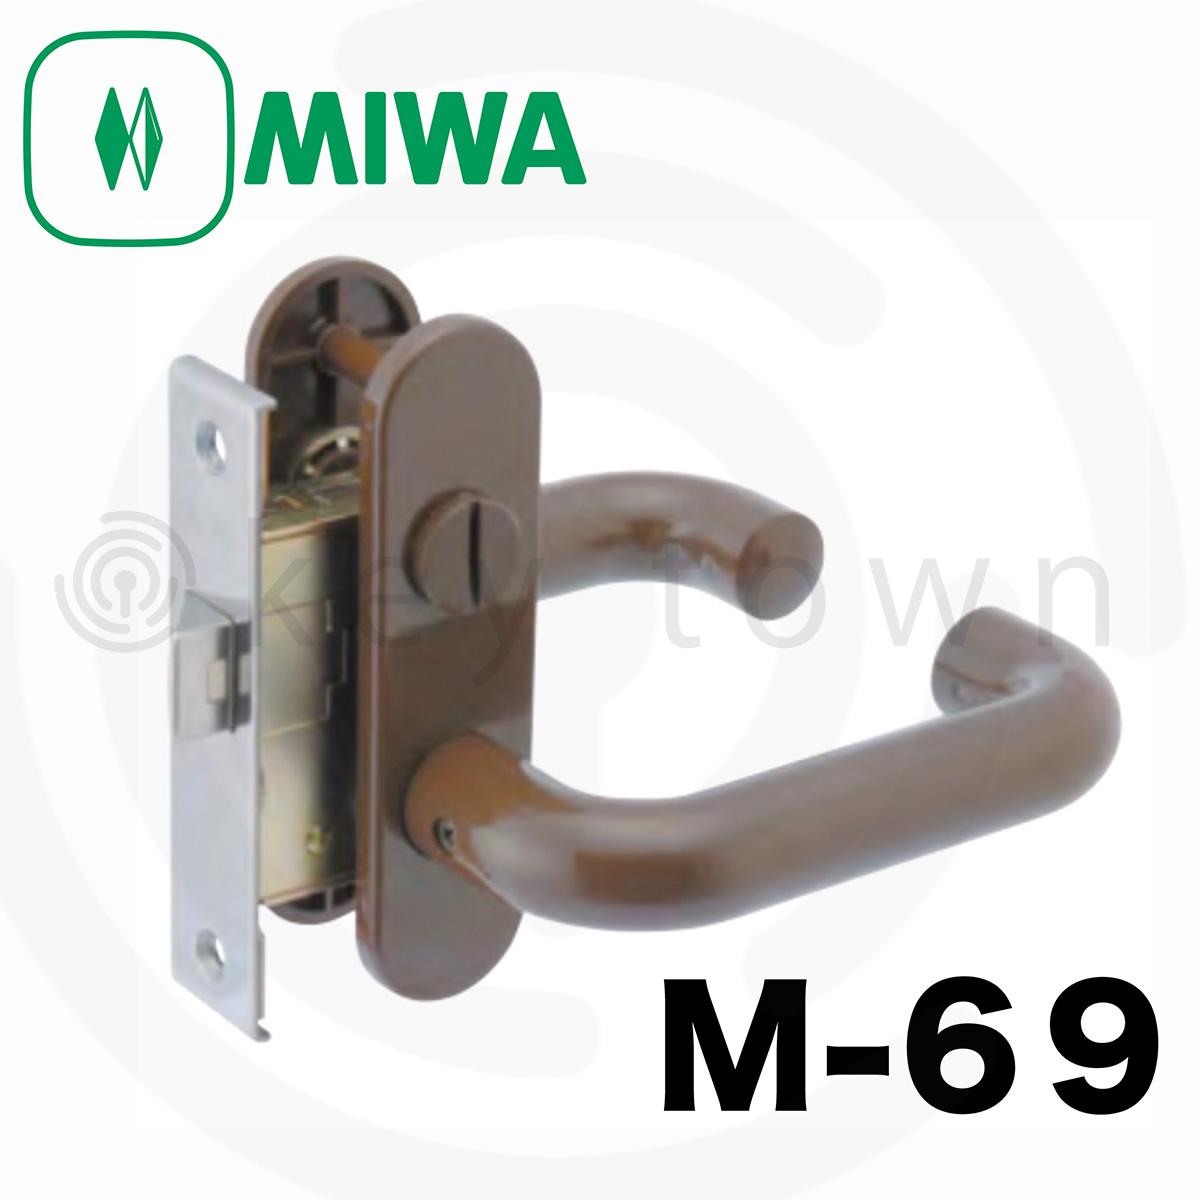 MIWA 【美和ロック】 特殊錠 浴室錠 [MIWA-M-69] Kシリーズ[M-69]｜鍵・シリンダーの格安ネット通販【鍵TOWN】